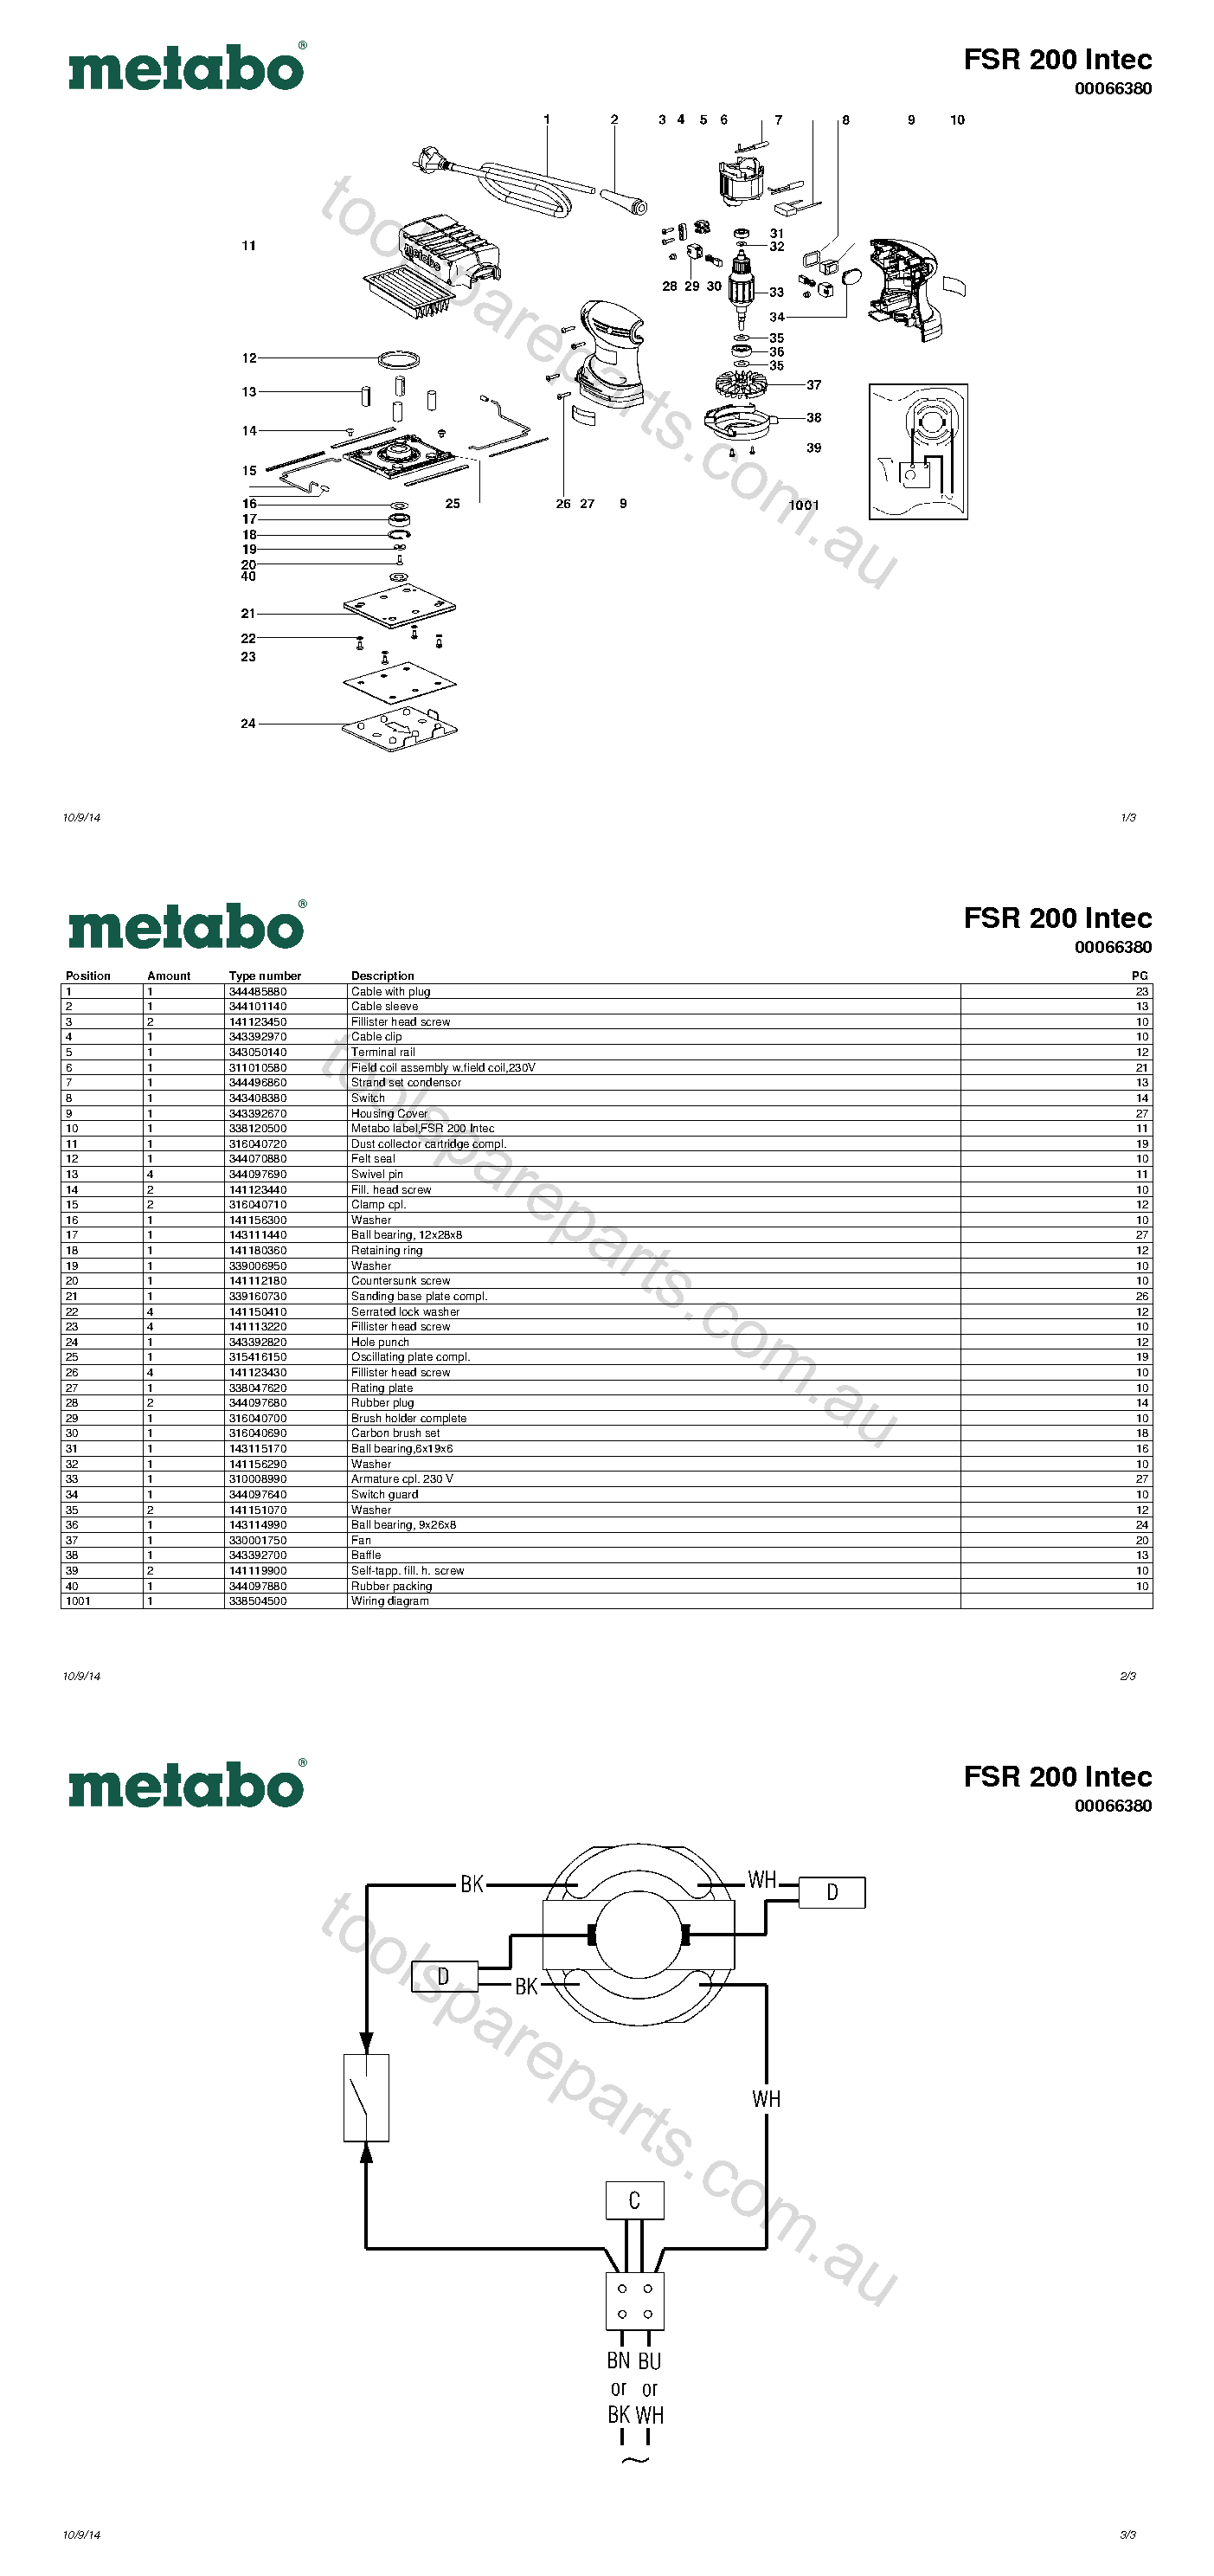 Metabo FSR 200 Intec 00066380  Diagram 1